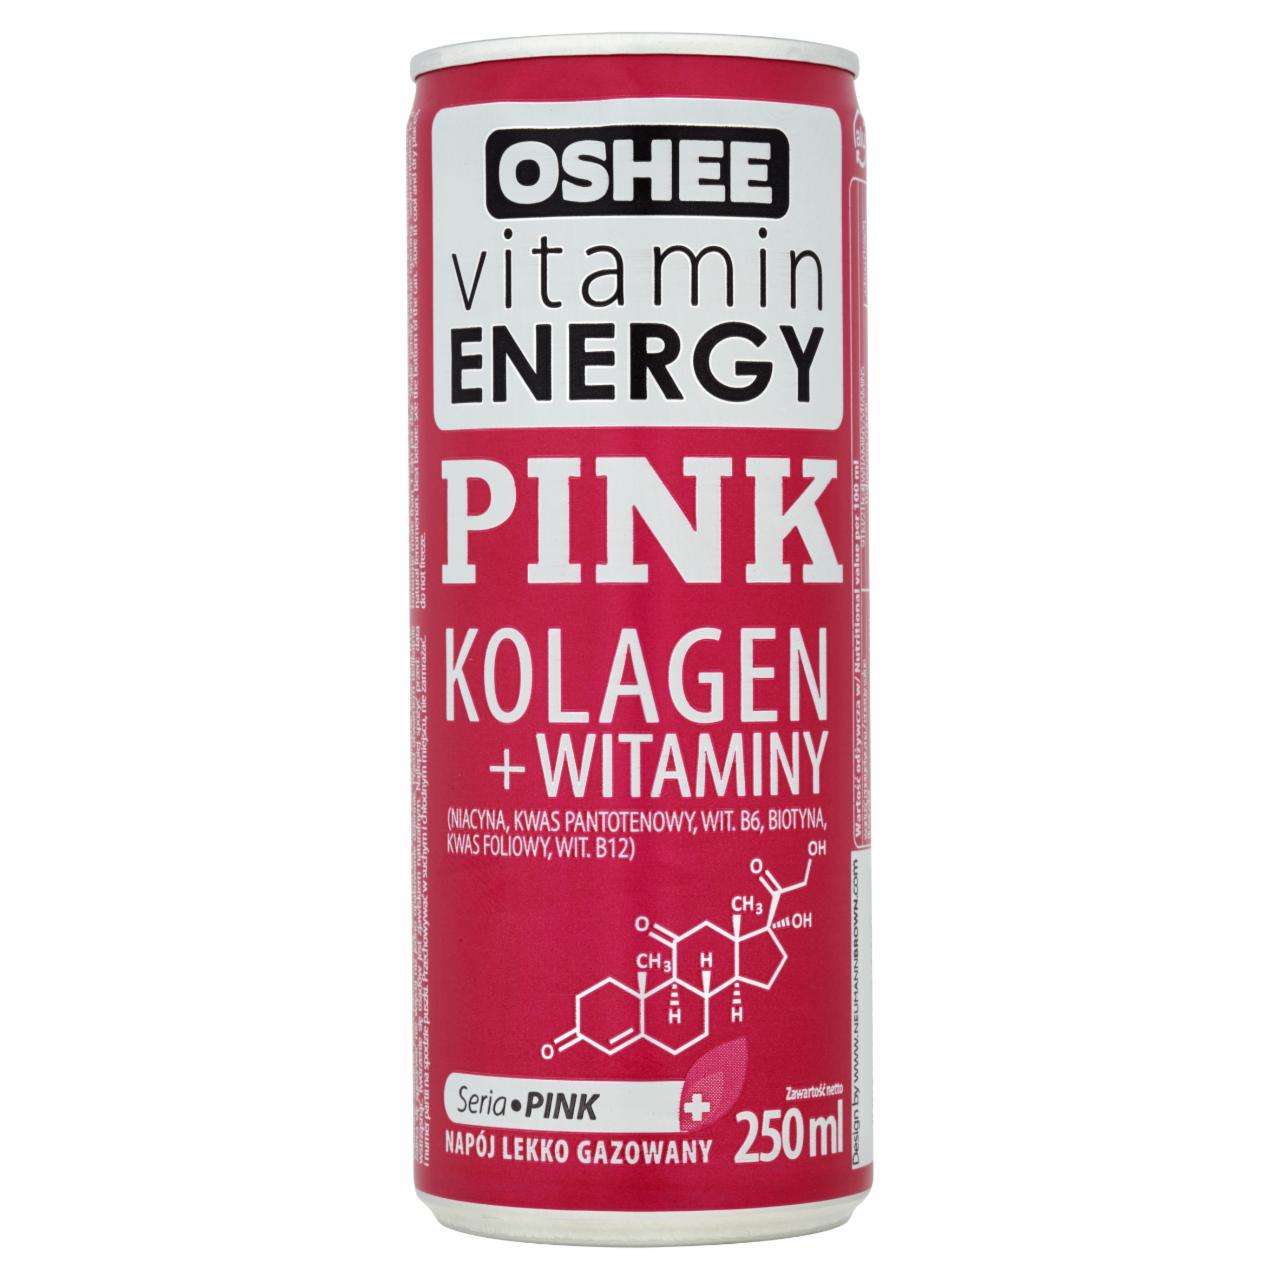 Zdjęcia - Oshee Vitamin Energy Pink Kolagen Napój lekko gazowany 250 ml